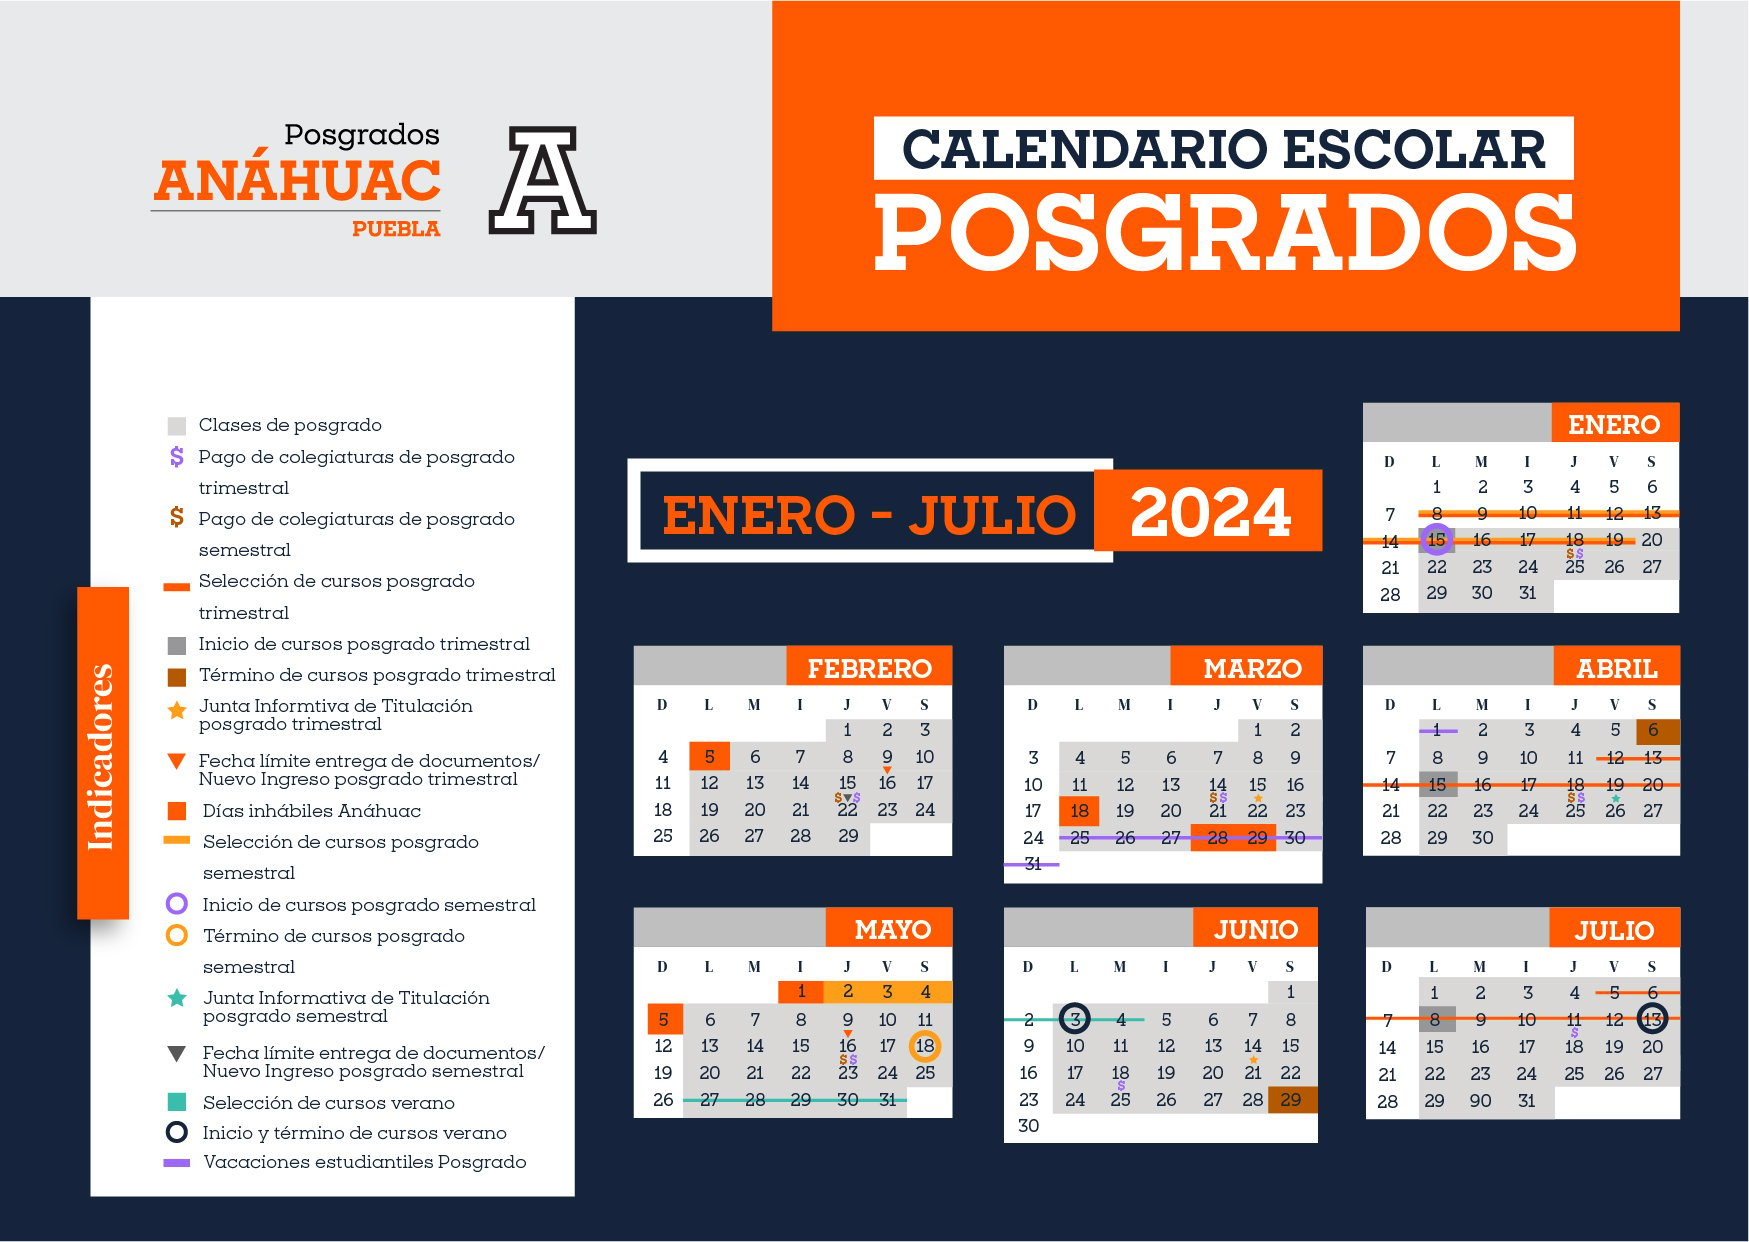 Calendario Escolar Posgrados enero - julio 2024 (horizontal)